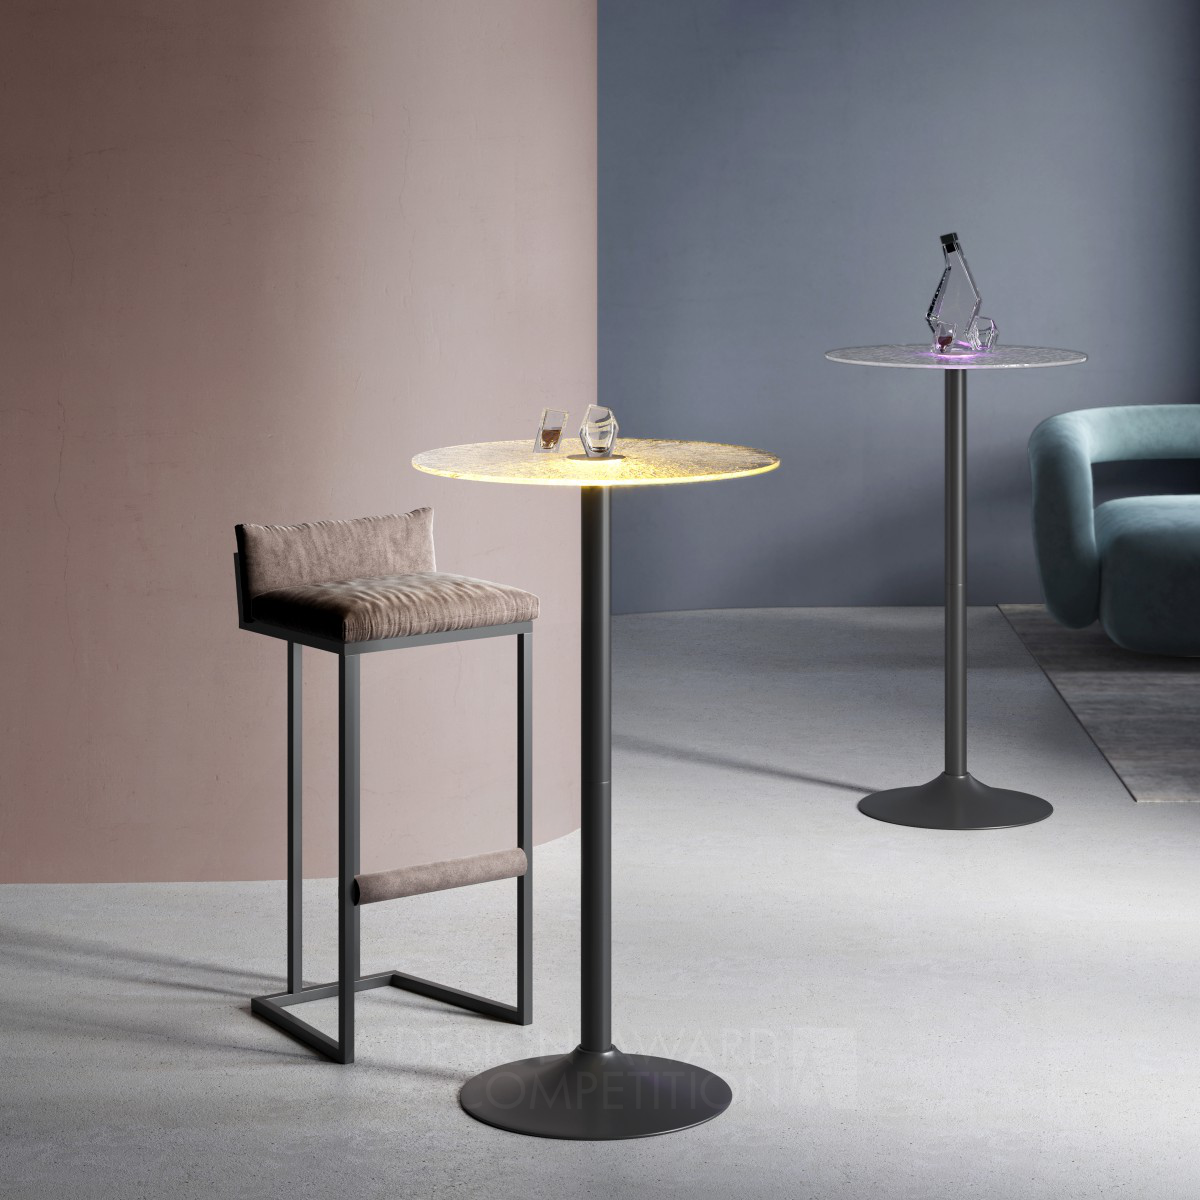 Ziel Home Furnishing Technology Co., Ltd wins Iron at the prestigious A' Furniture Design Award with Glacier Bar Table.